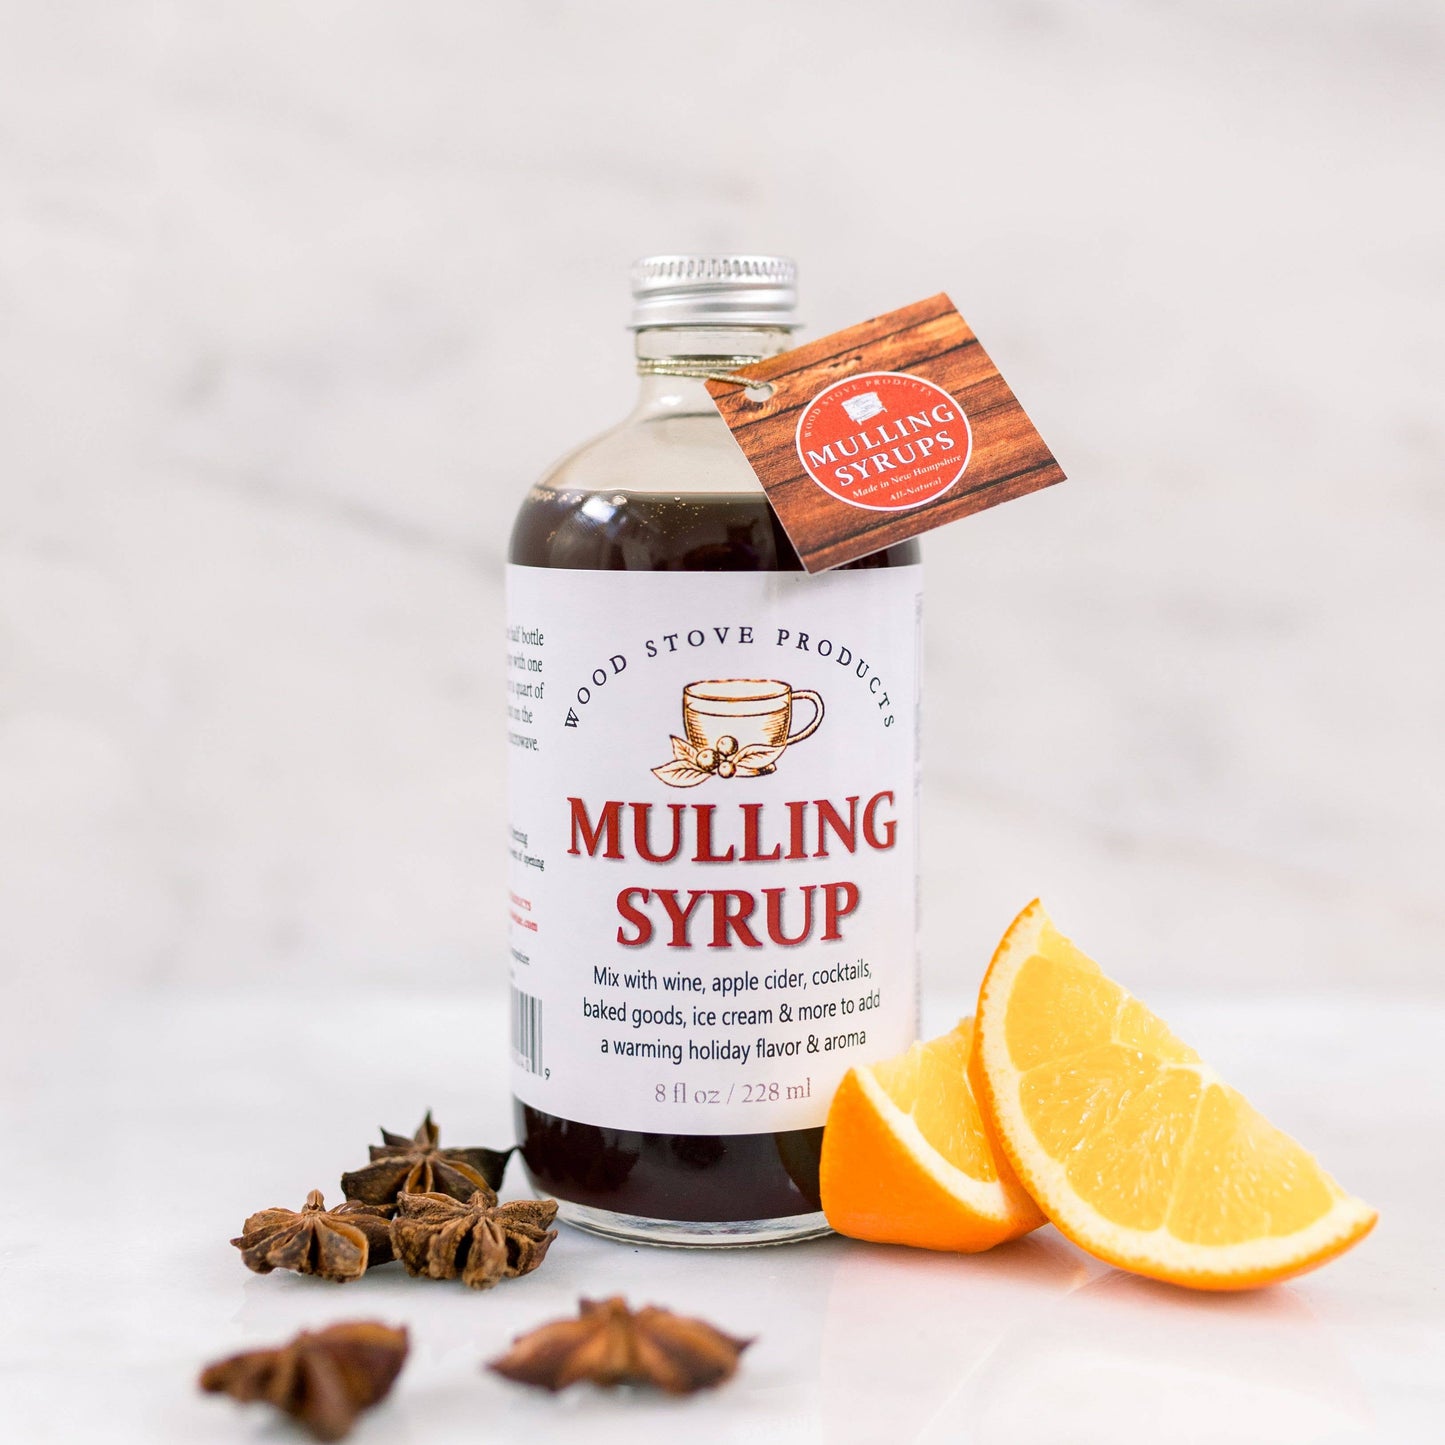 Wood Stove Kitchen - Mulling Syrup, 8 fl oz